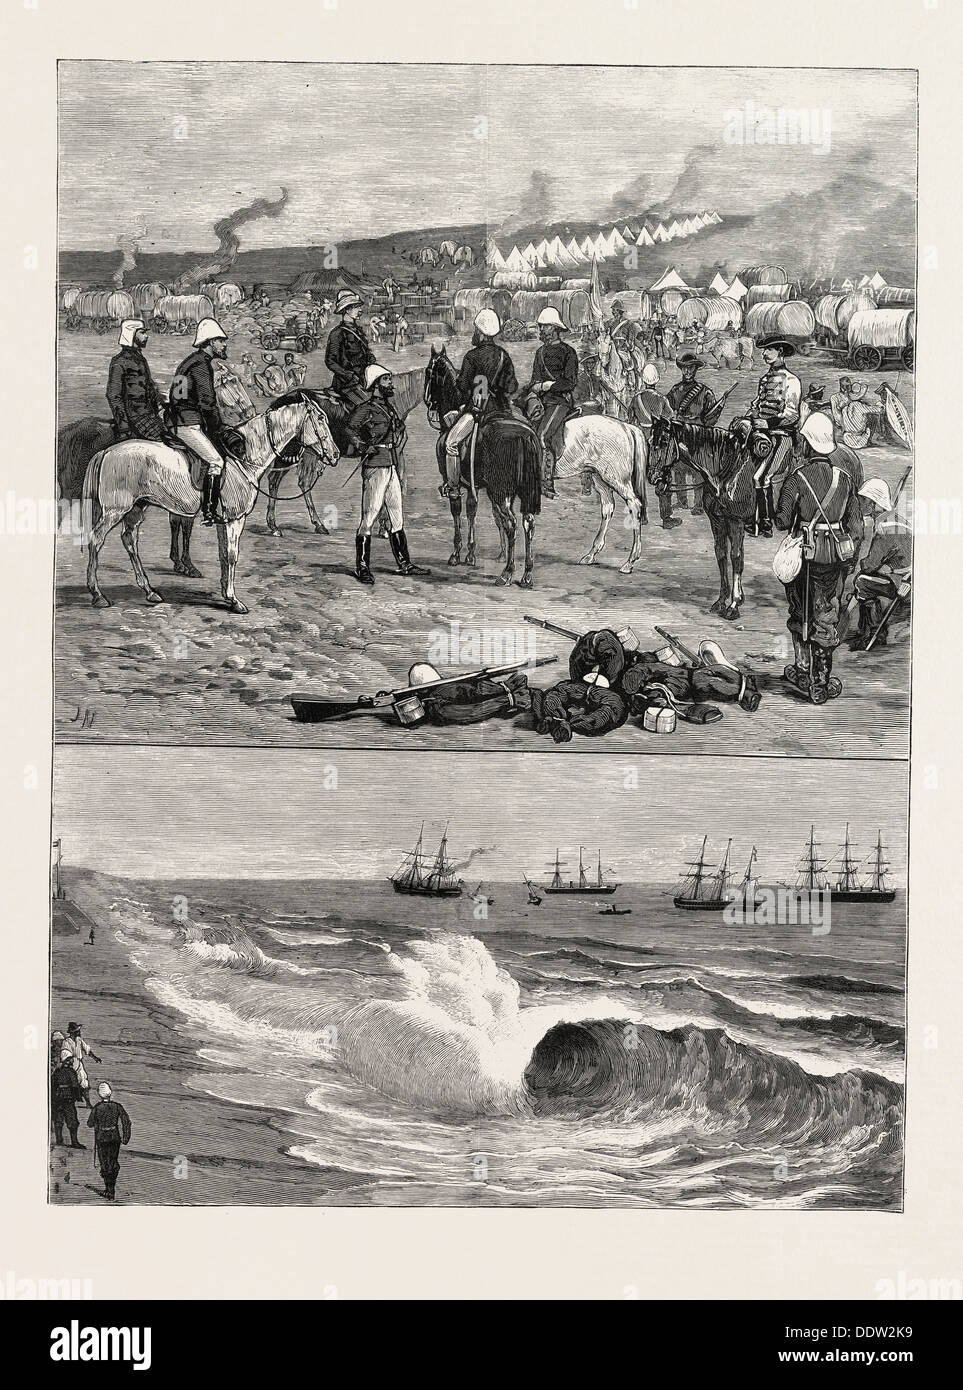 THE ZULU WAR, ENGRAVING 1879 Stock Photo